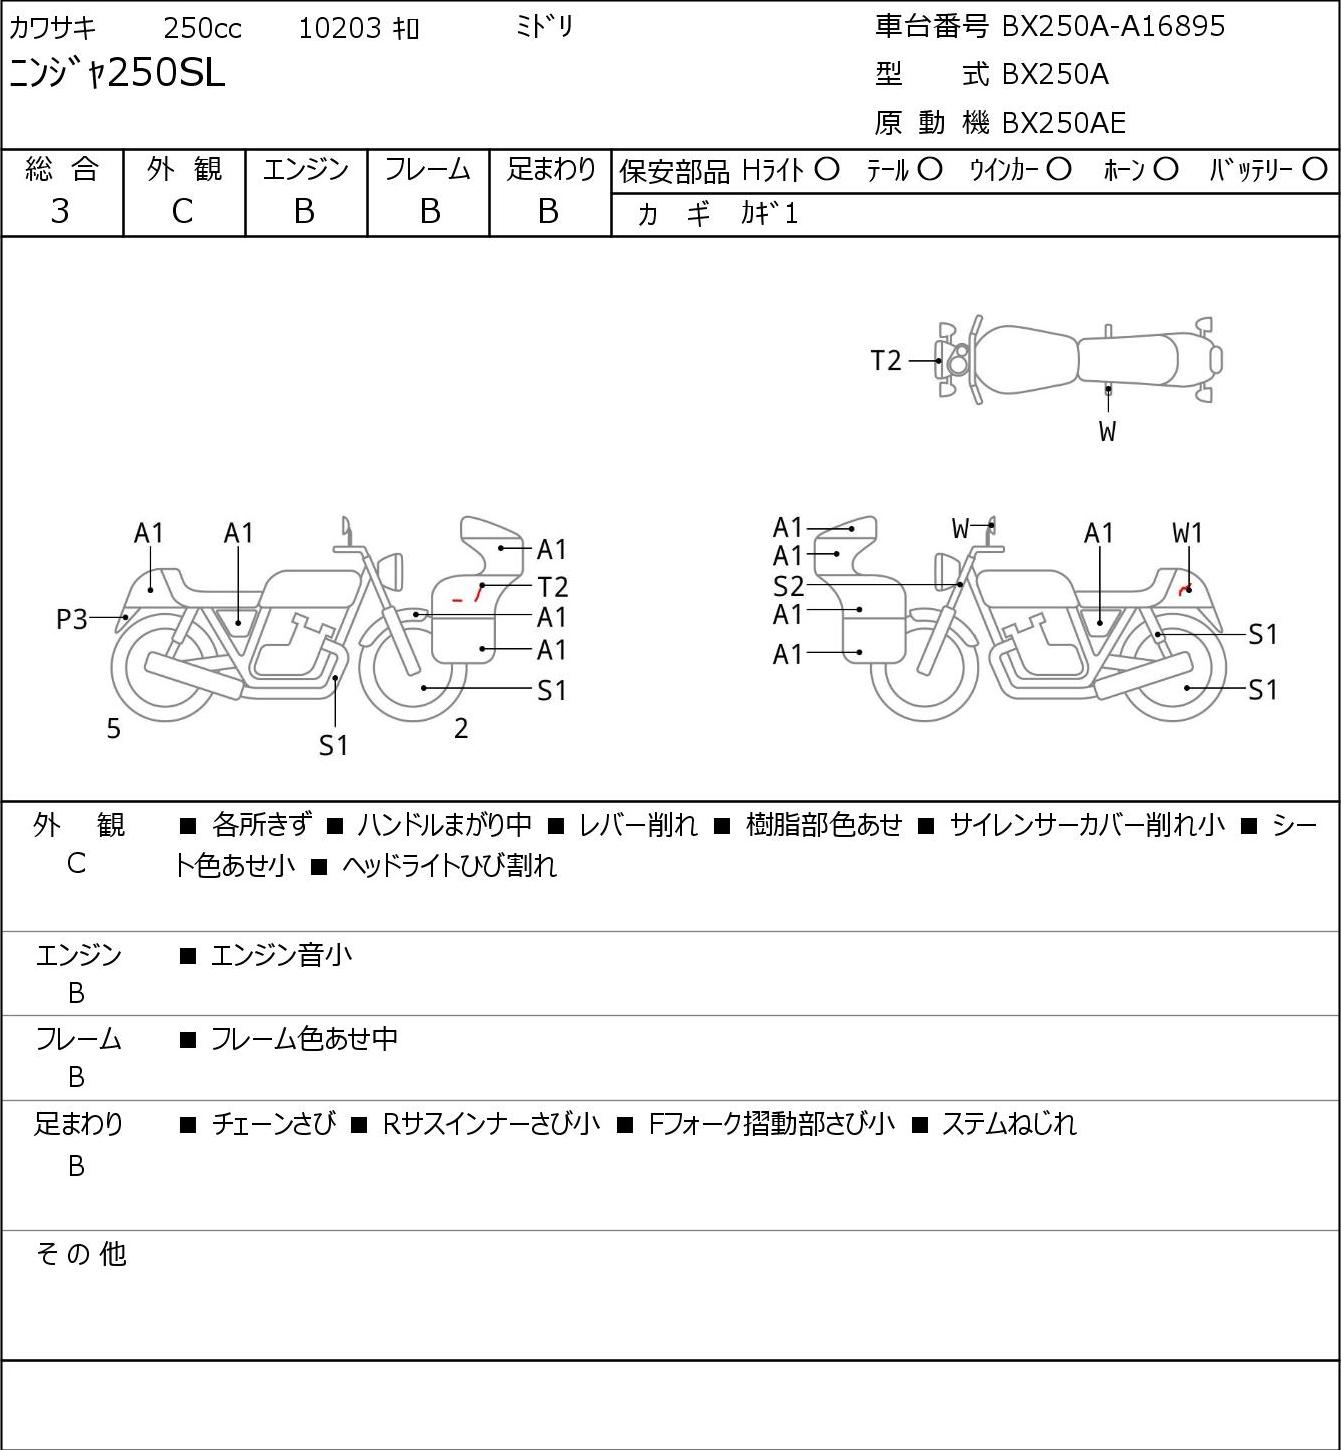 Kawasaki NINJA 250 SL BX250A г. 10203